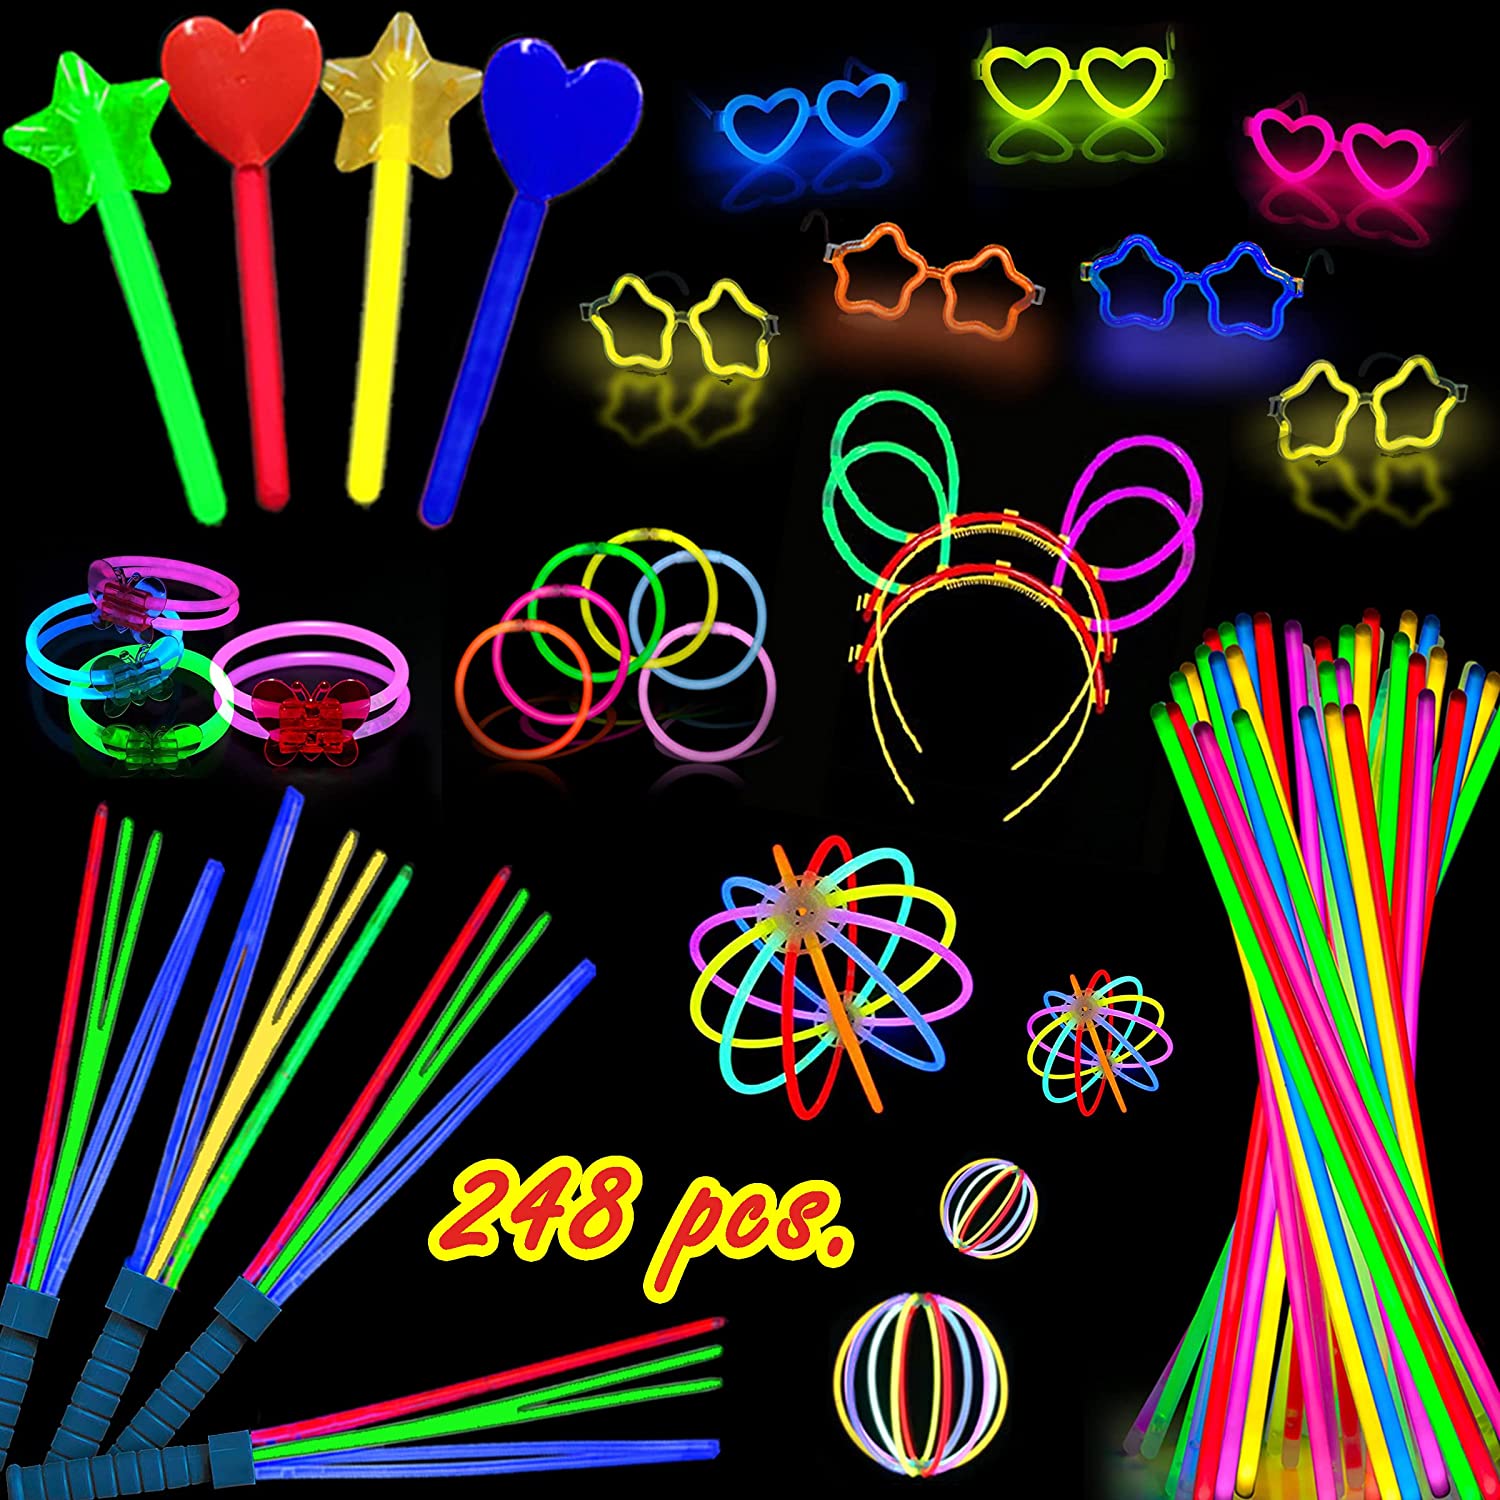 ColorHome Glow Sticks Bulk - 24 Pcs LED Foam Sticks Glow Batons with 3  Modes Flashing Effect, Glow in The Dark Party Supplies